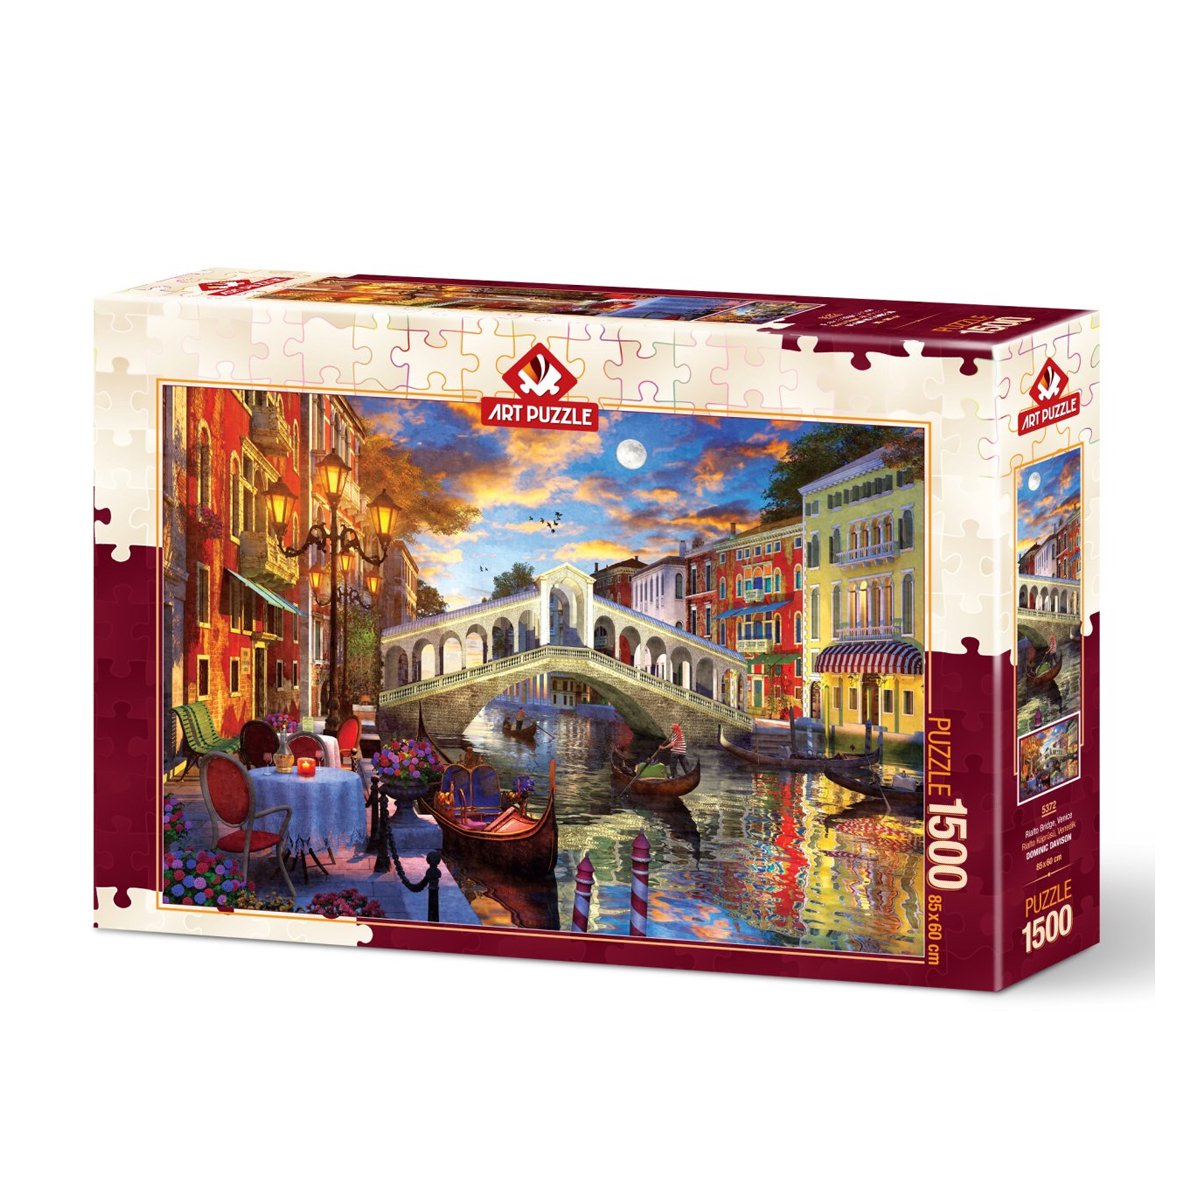 5372 Art Puzzle Rialto Köprüsü, Venedik 1500 parça Puzzle / +15 yaş